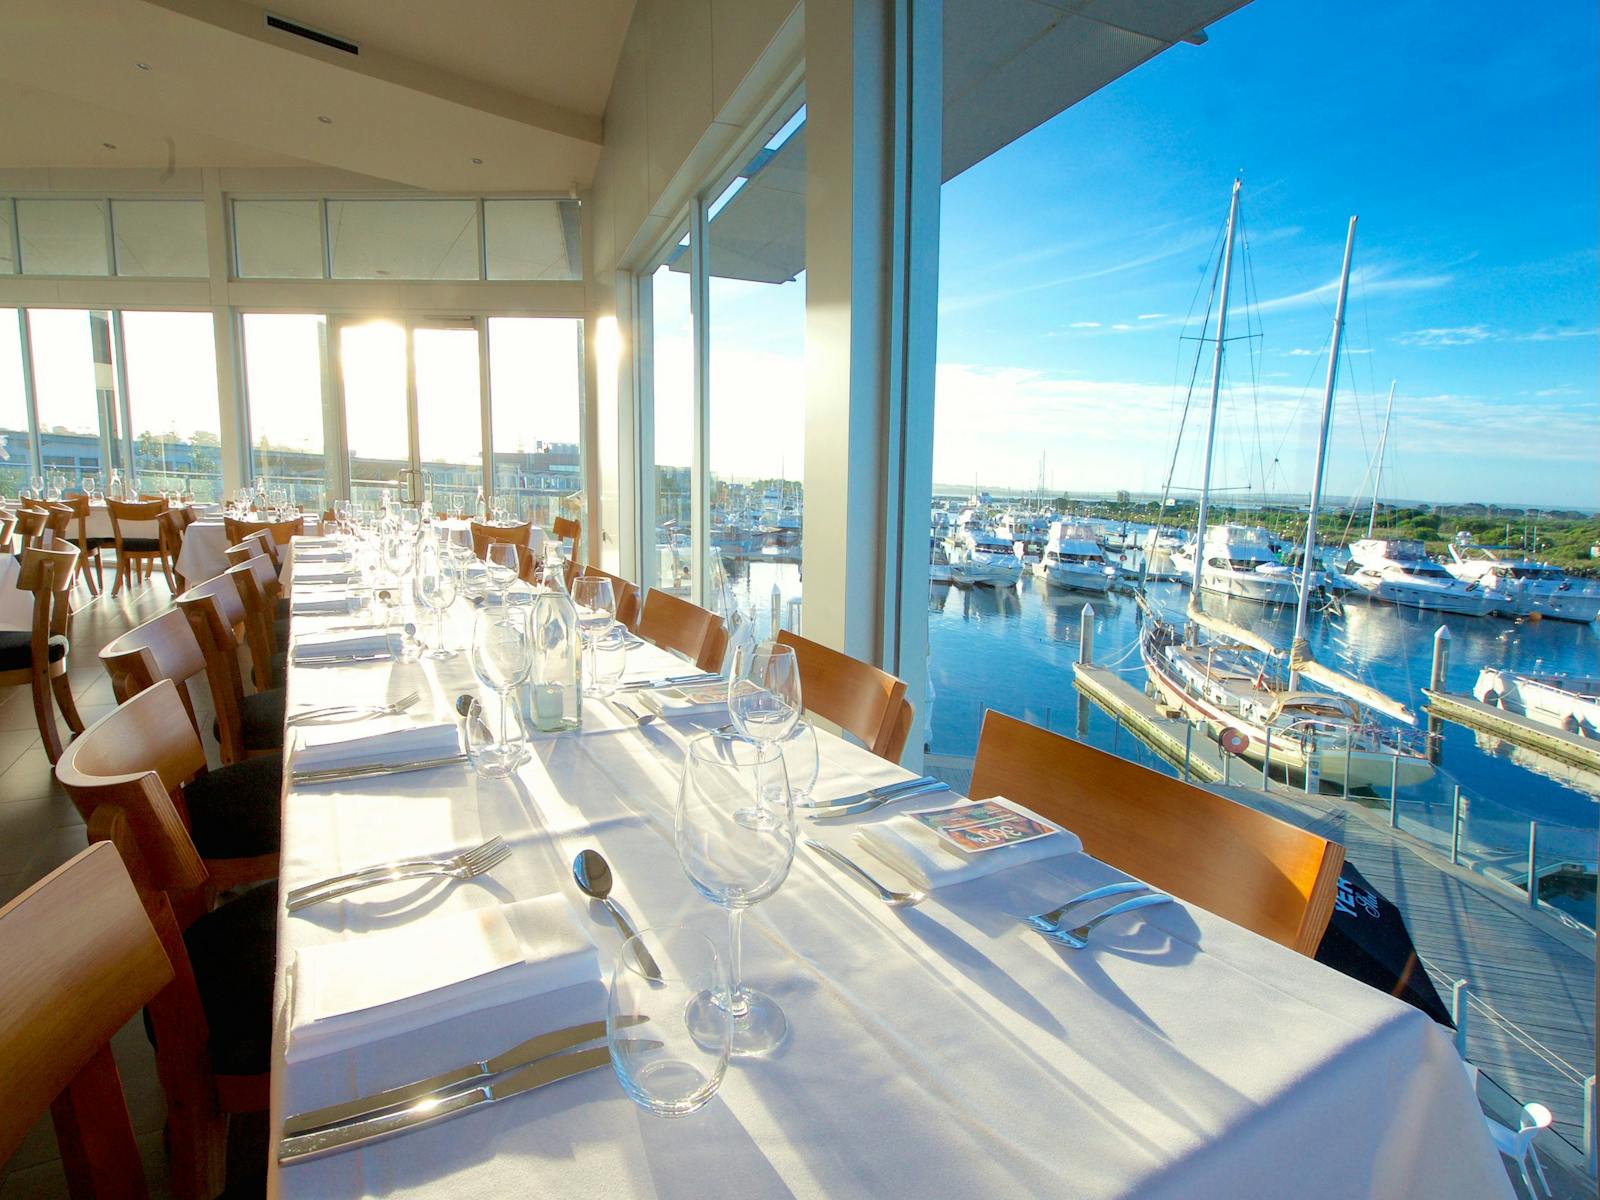 360Q restaurant and wedding functions venue at Queenscliff